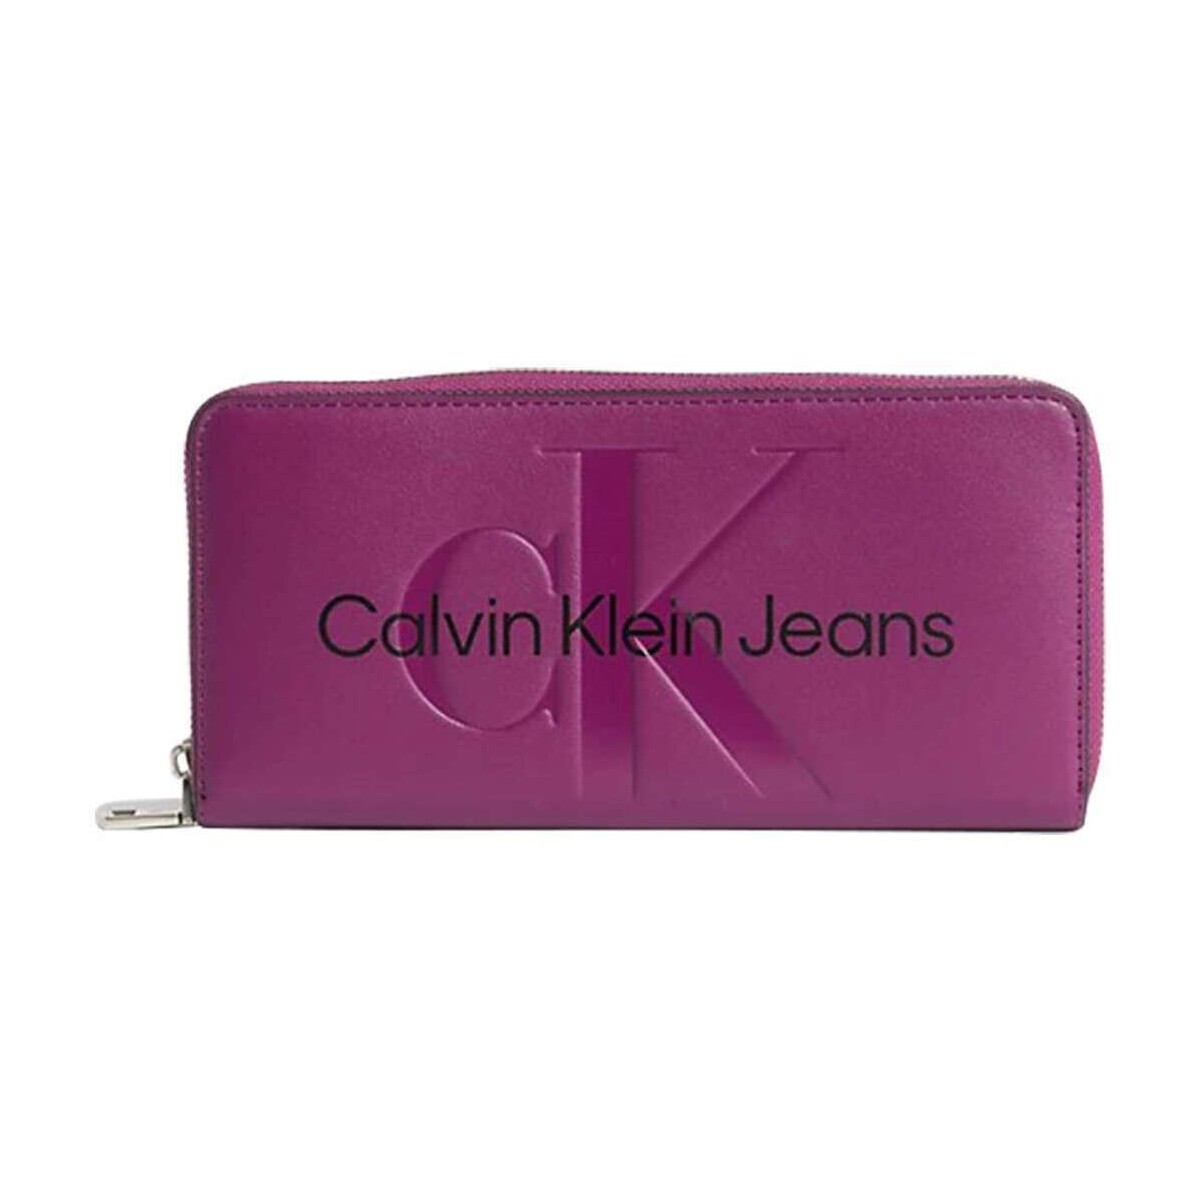 Sacs Femme Portefeuilles Calvin Klein Jeans 153158VTAH23 Rose